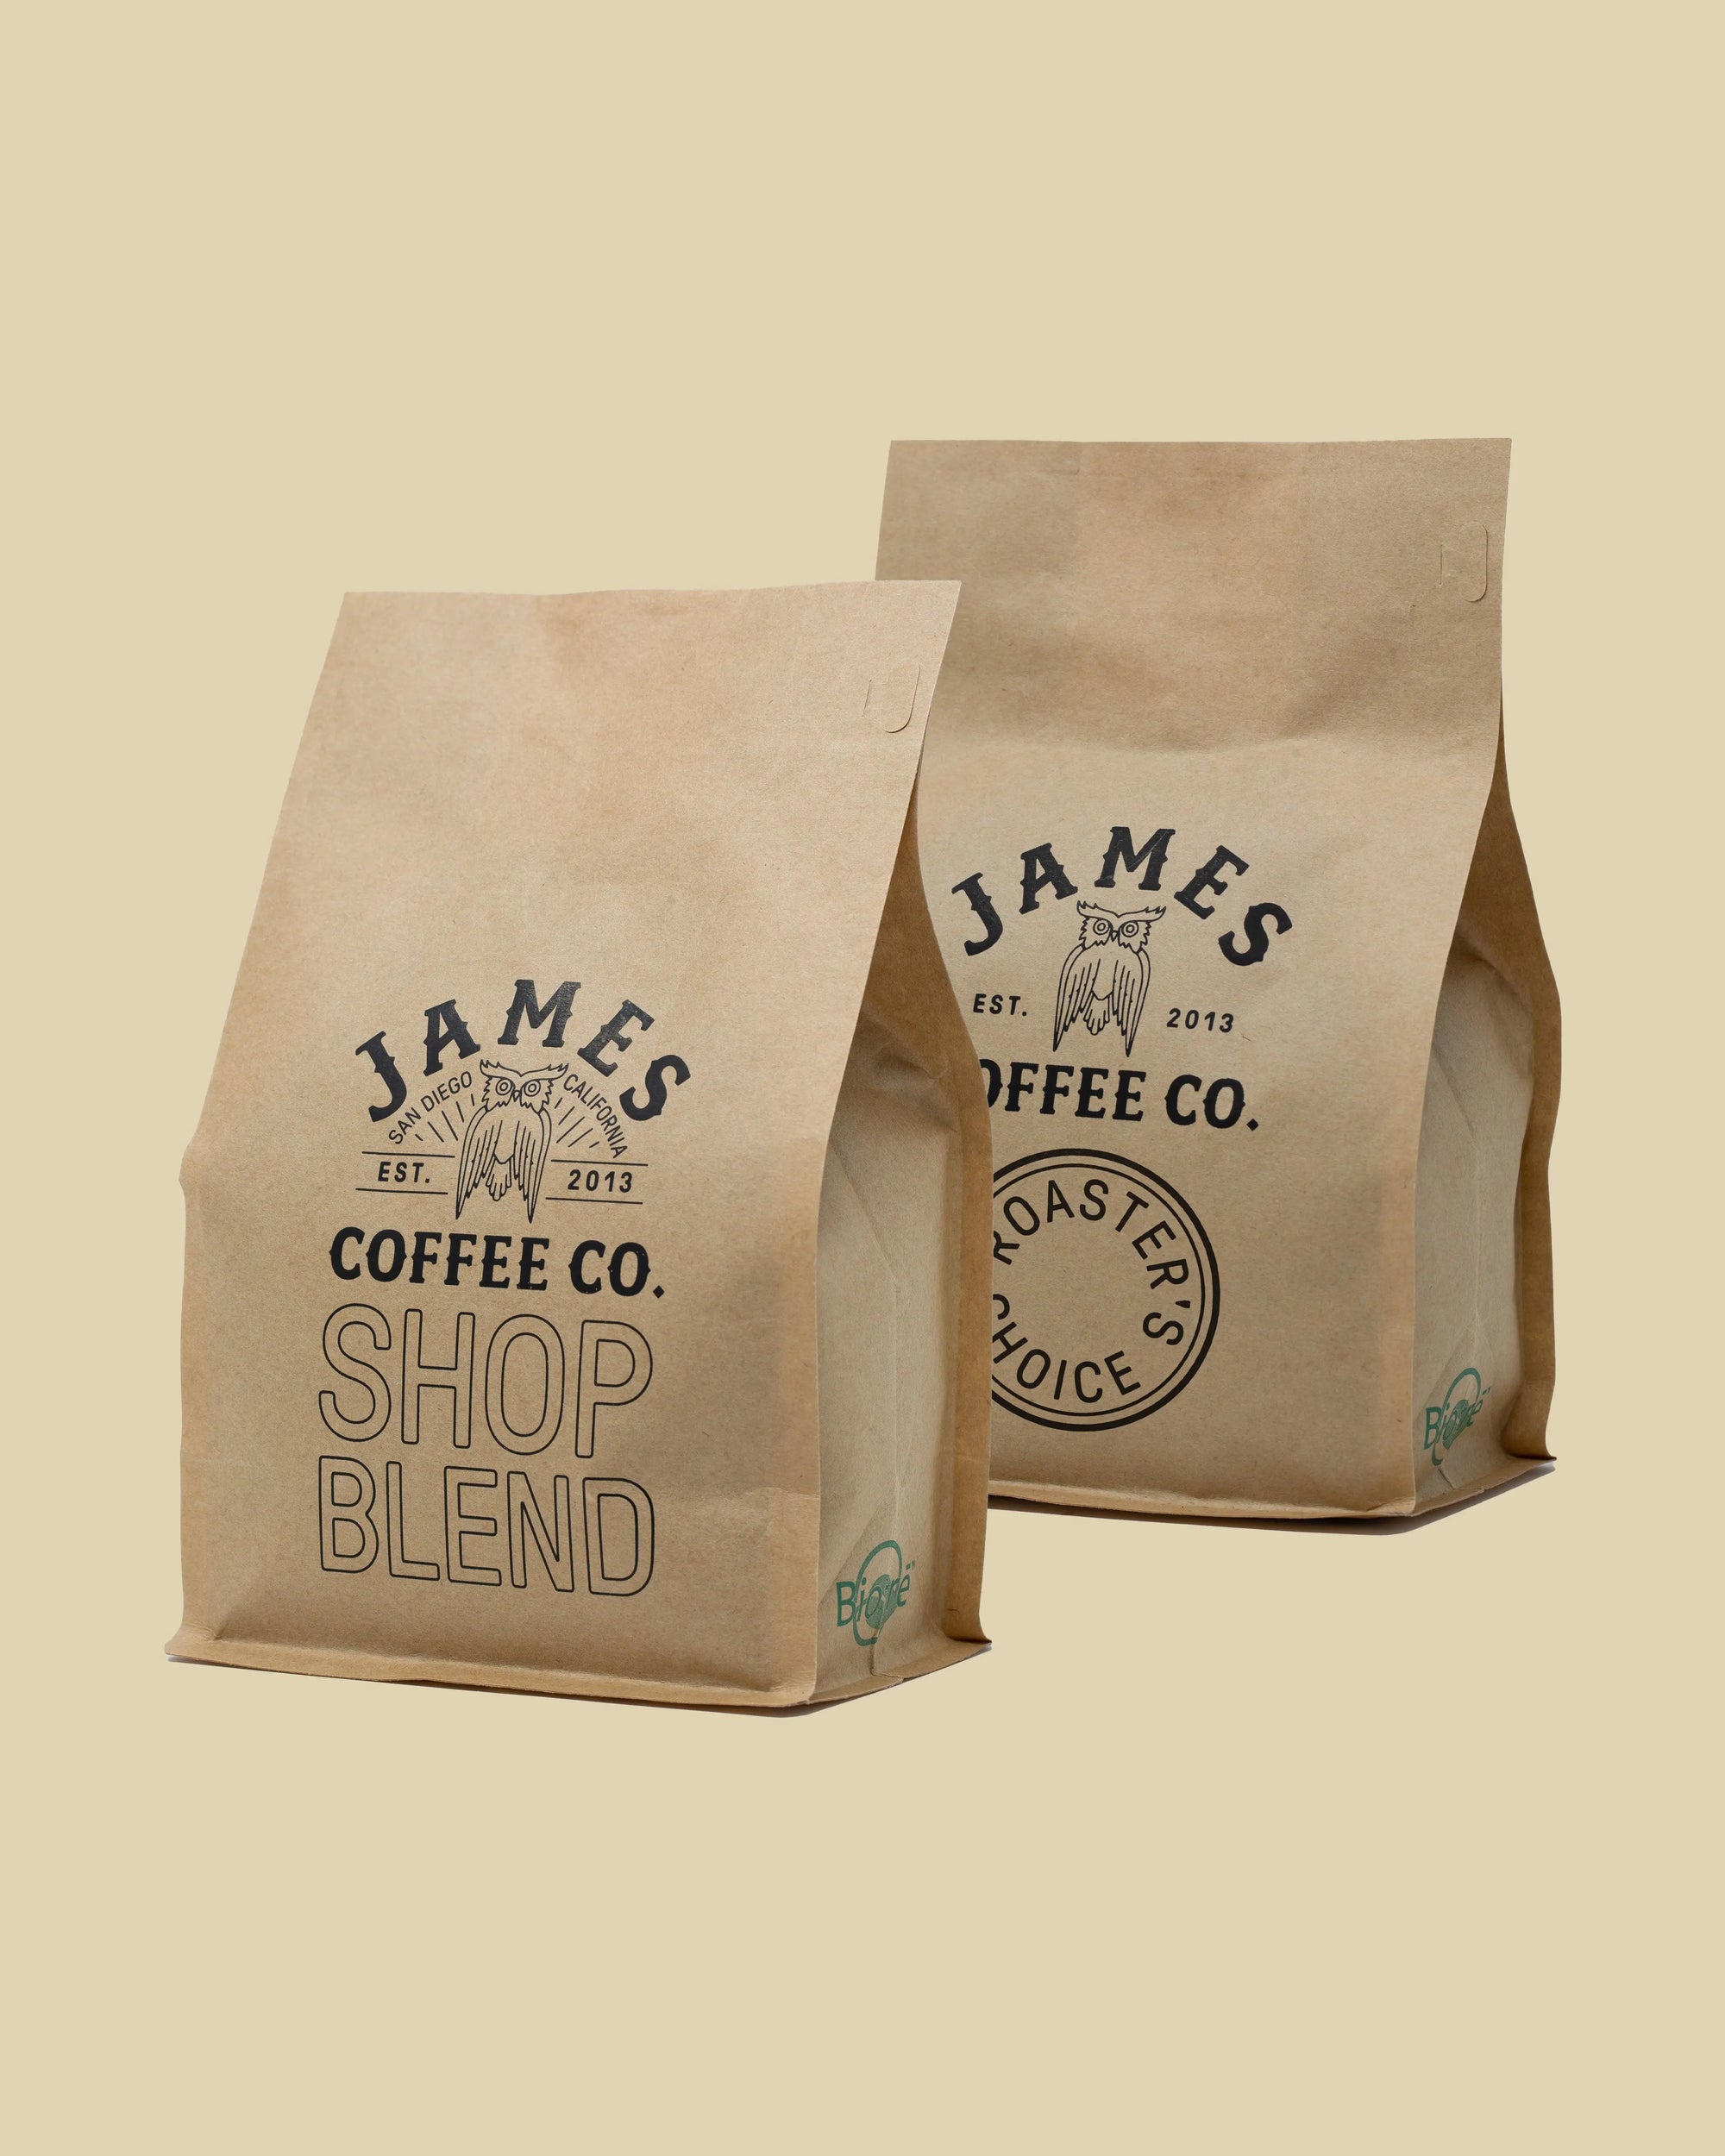 Shop Blend/Roaster's Choice James Coffee Co